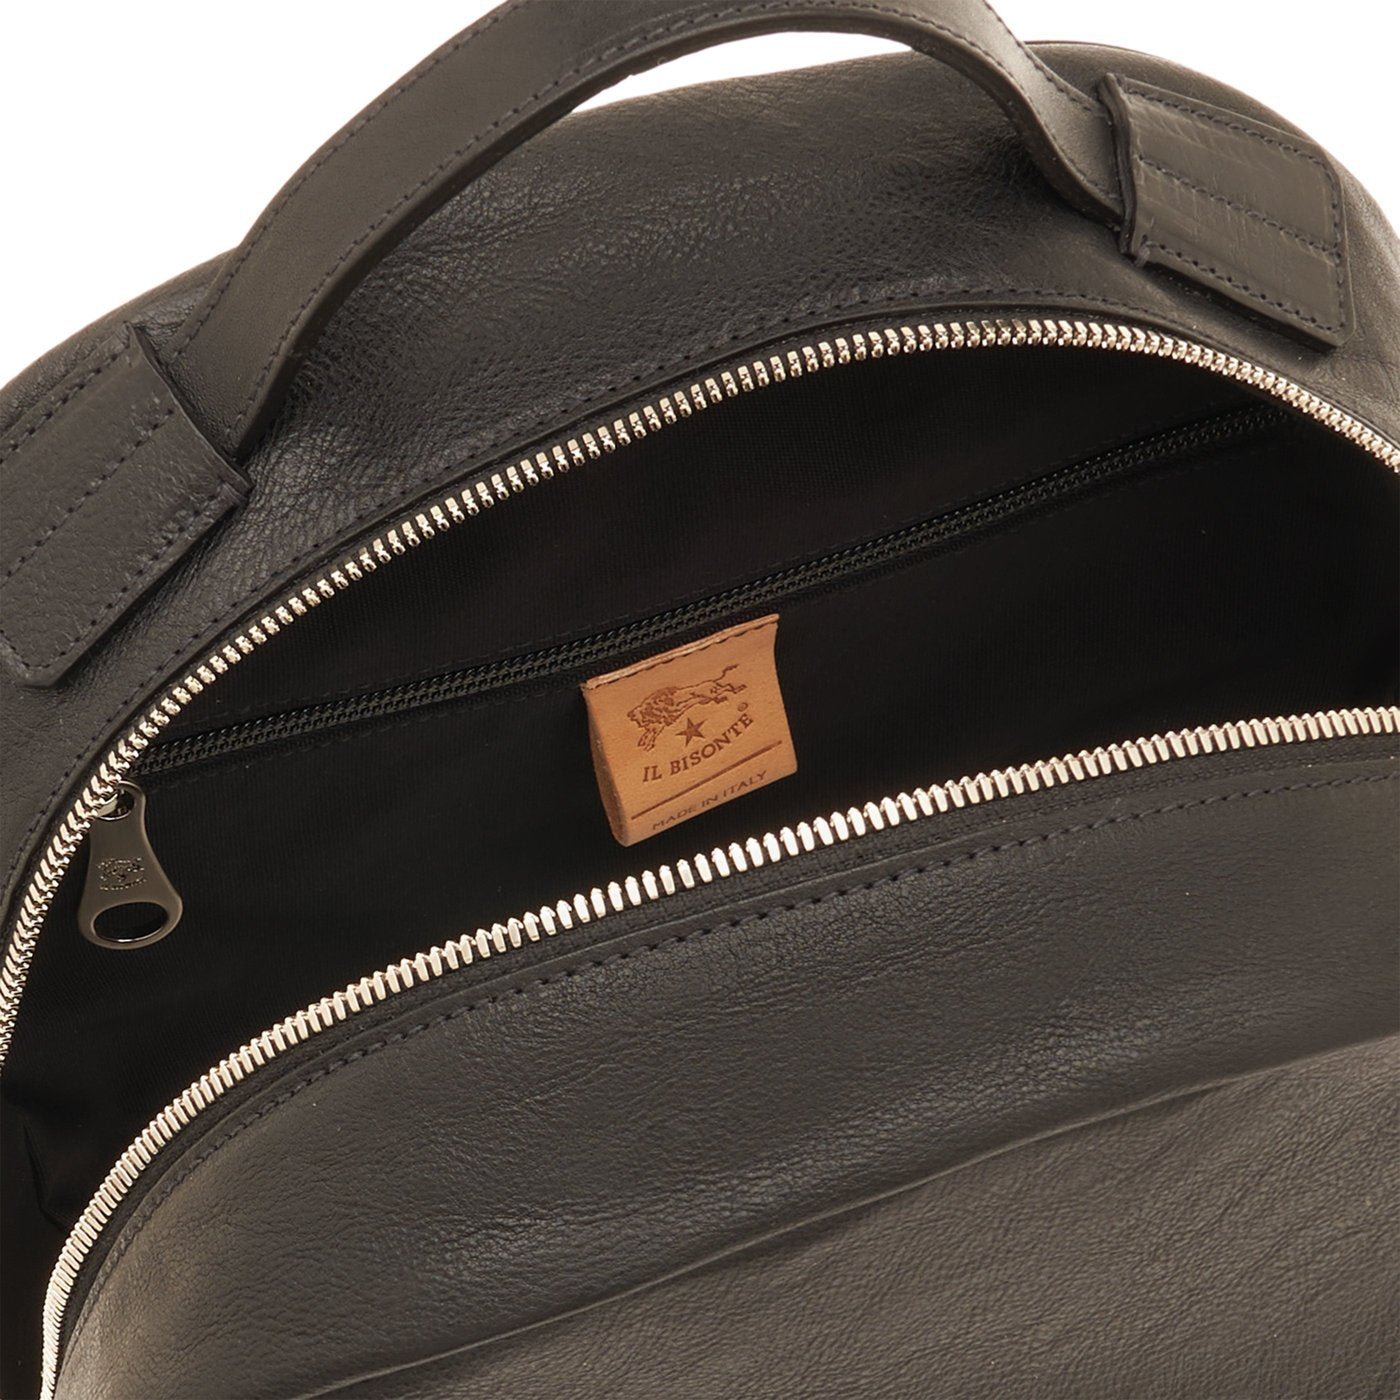 Meleto | Men's backpack in leather color black